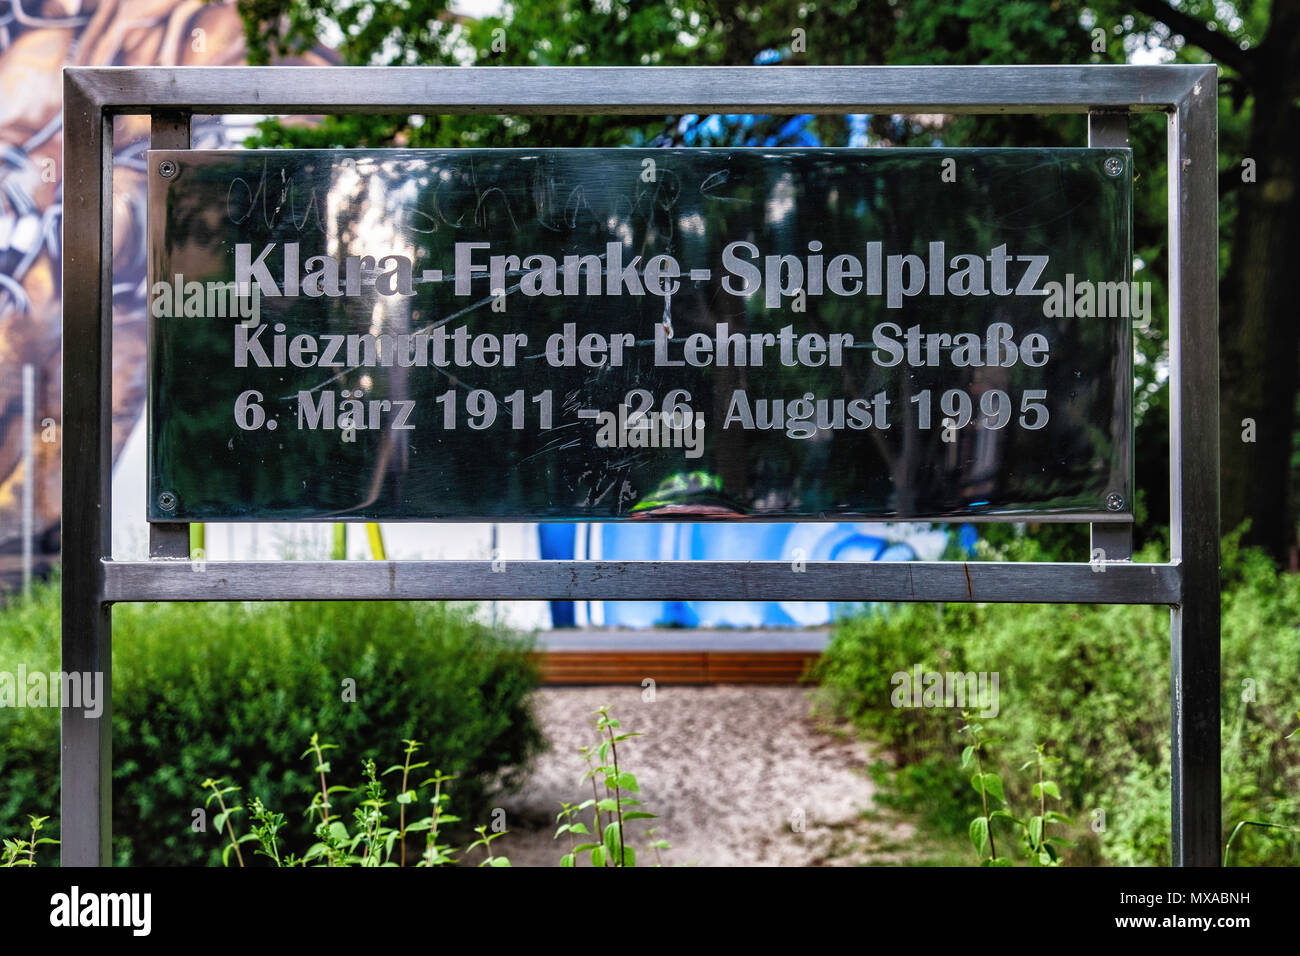 Berlin-Moabit. Lehrterstasse 30, Klara Franke Spielplatz. Memorrial plaque in playground honours woman who made it possible Stock Photo